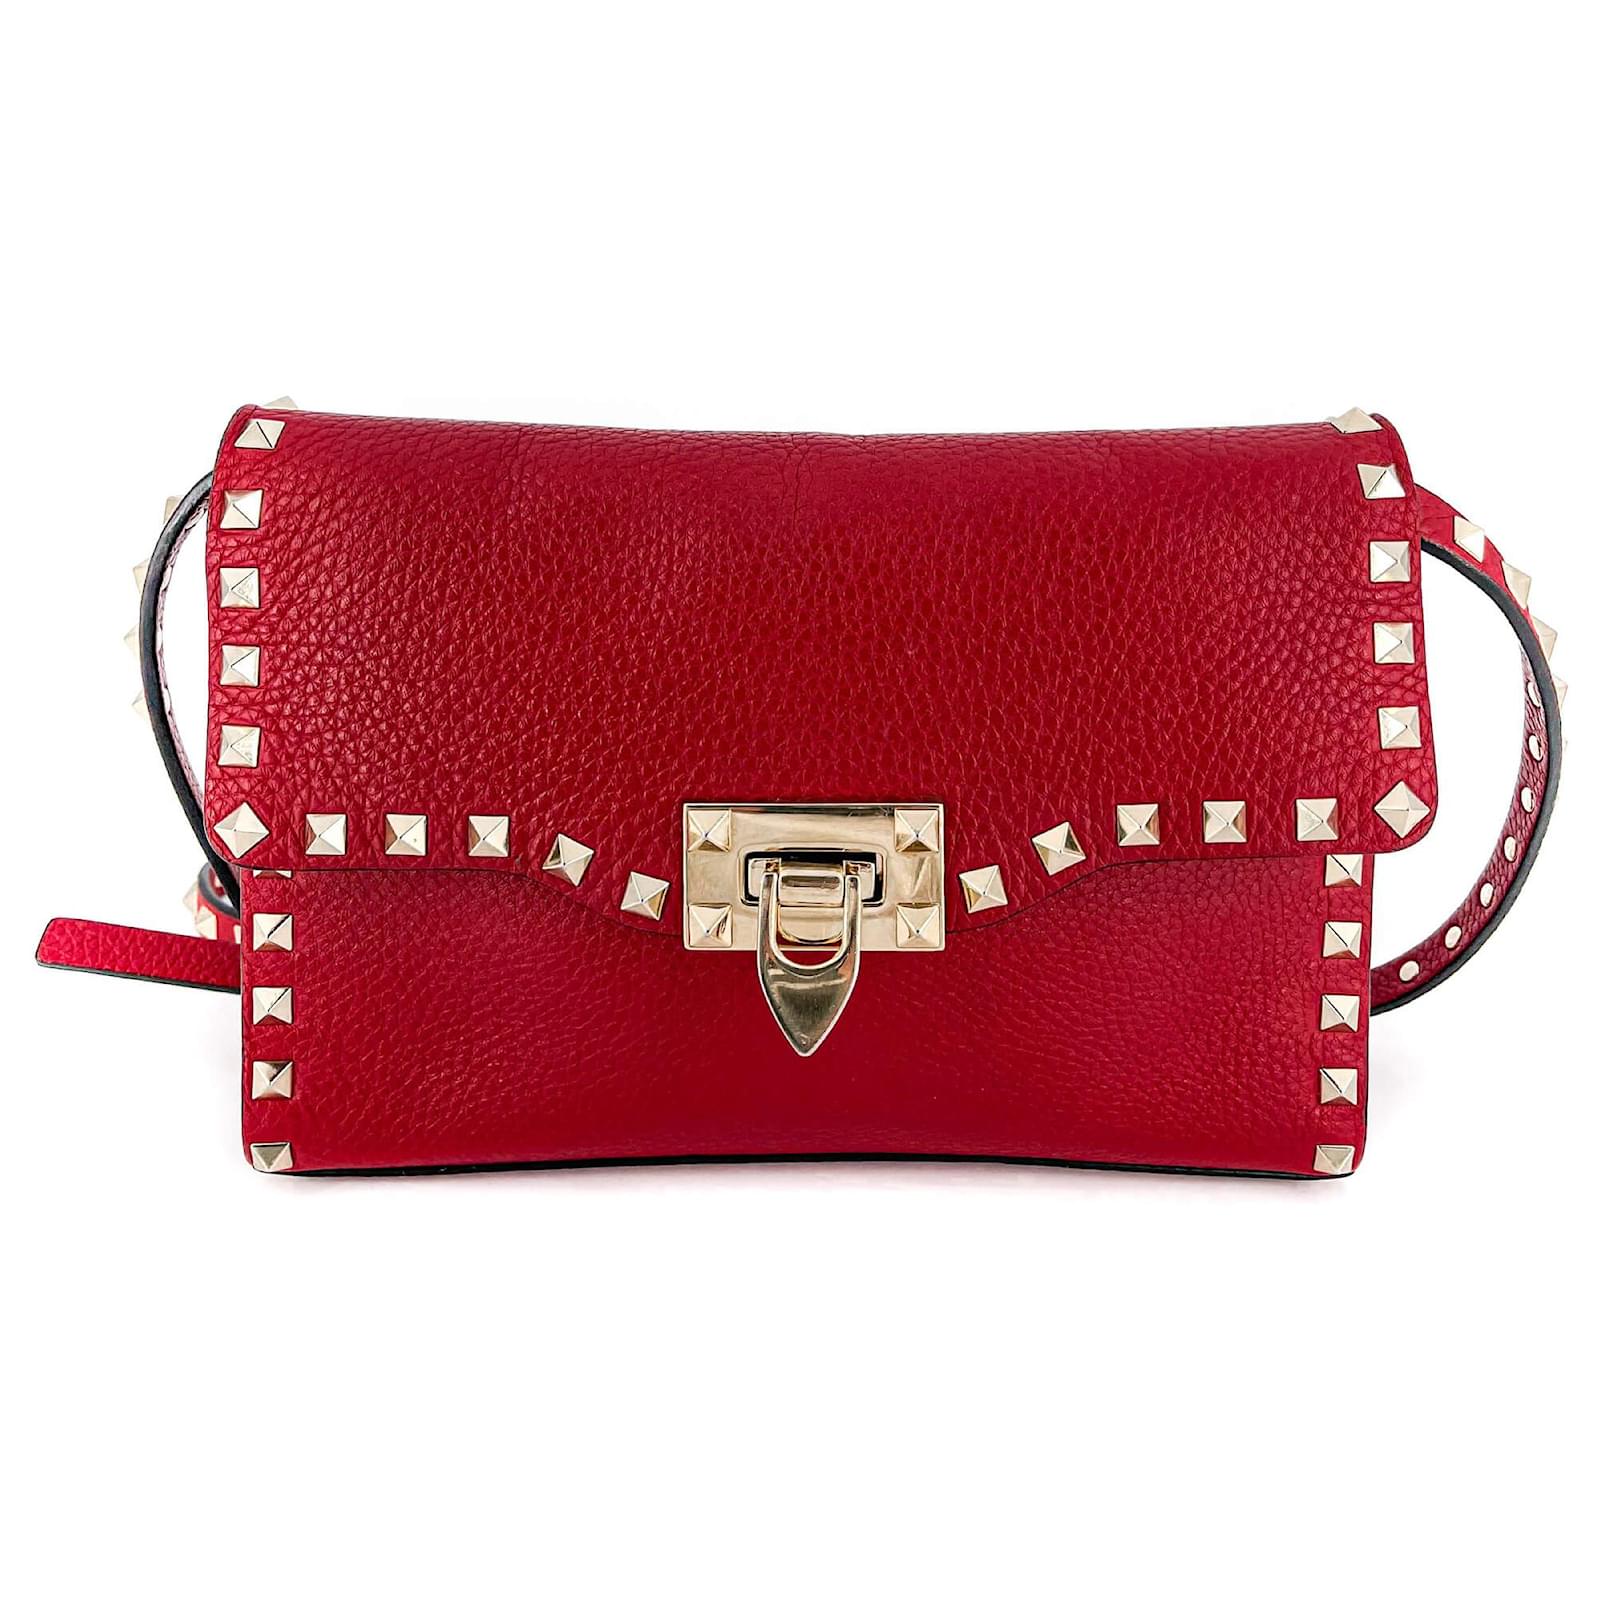 Rockstud leather crossbody bag Valentino Garavani Red in Leather